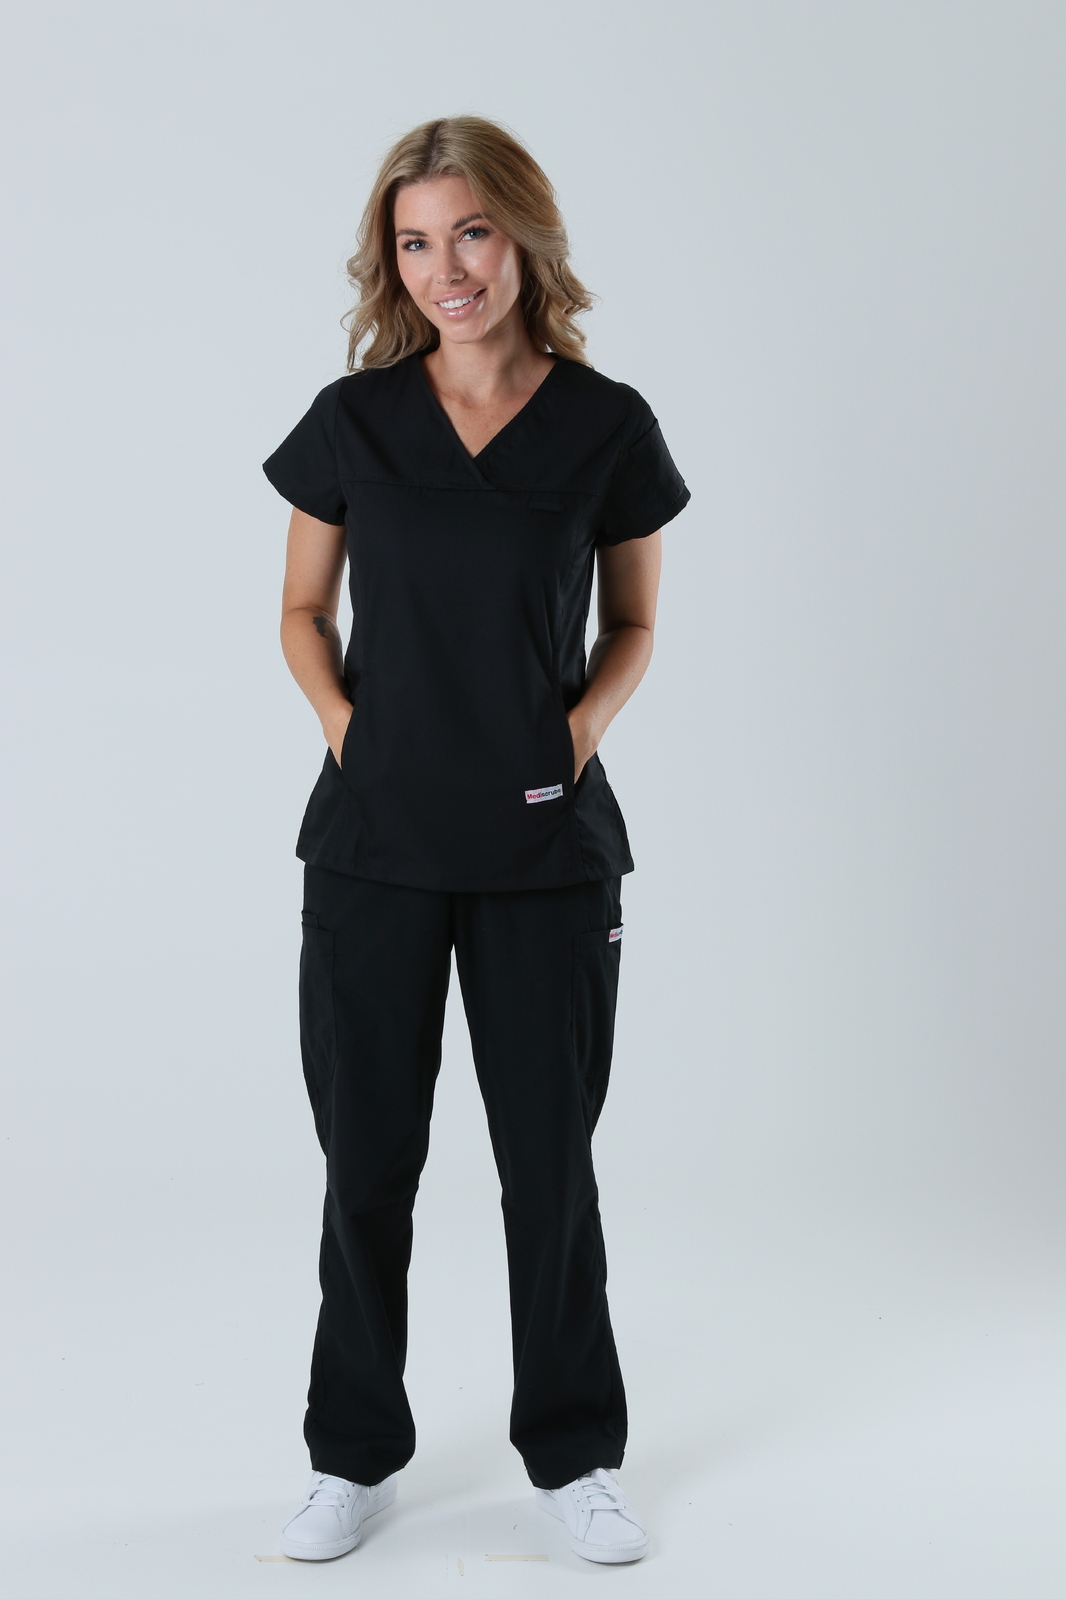 Moranbah Hospital - Nursing (Women's Fit Solid Scrub Top and Cargo Pants in Black incl Logos)